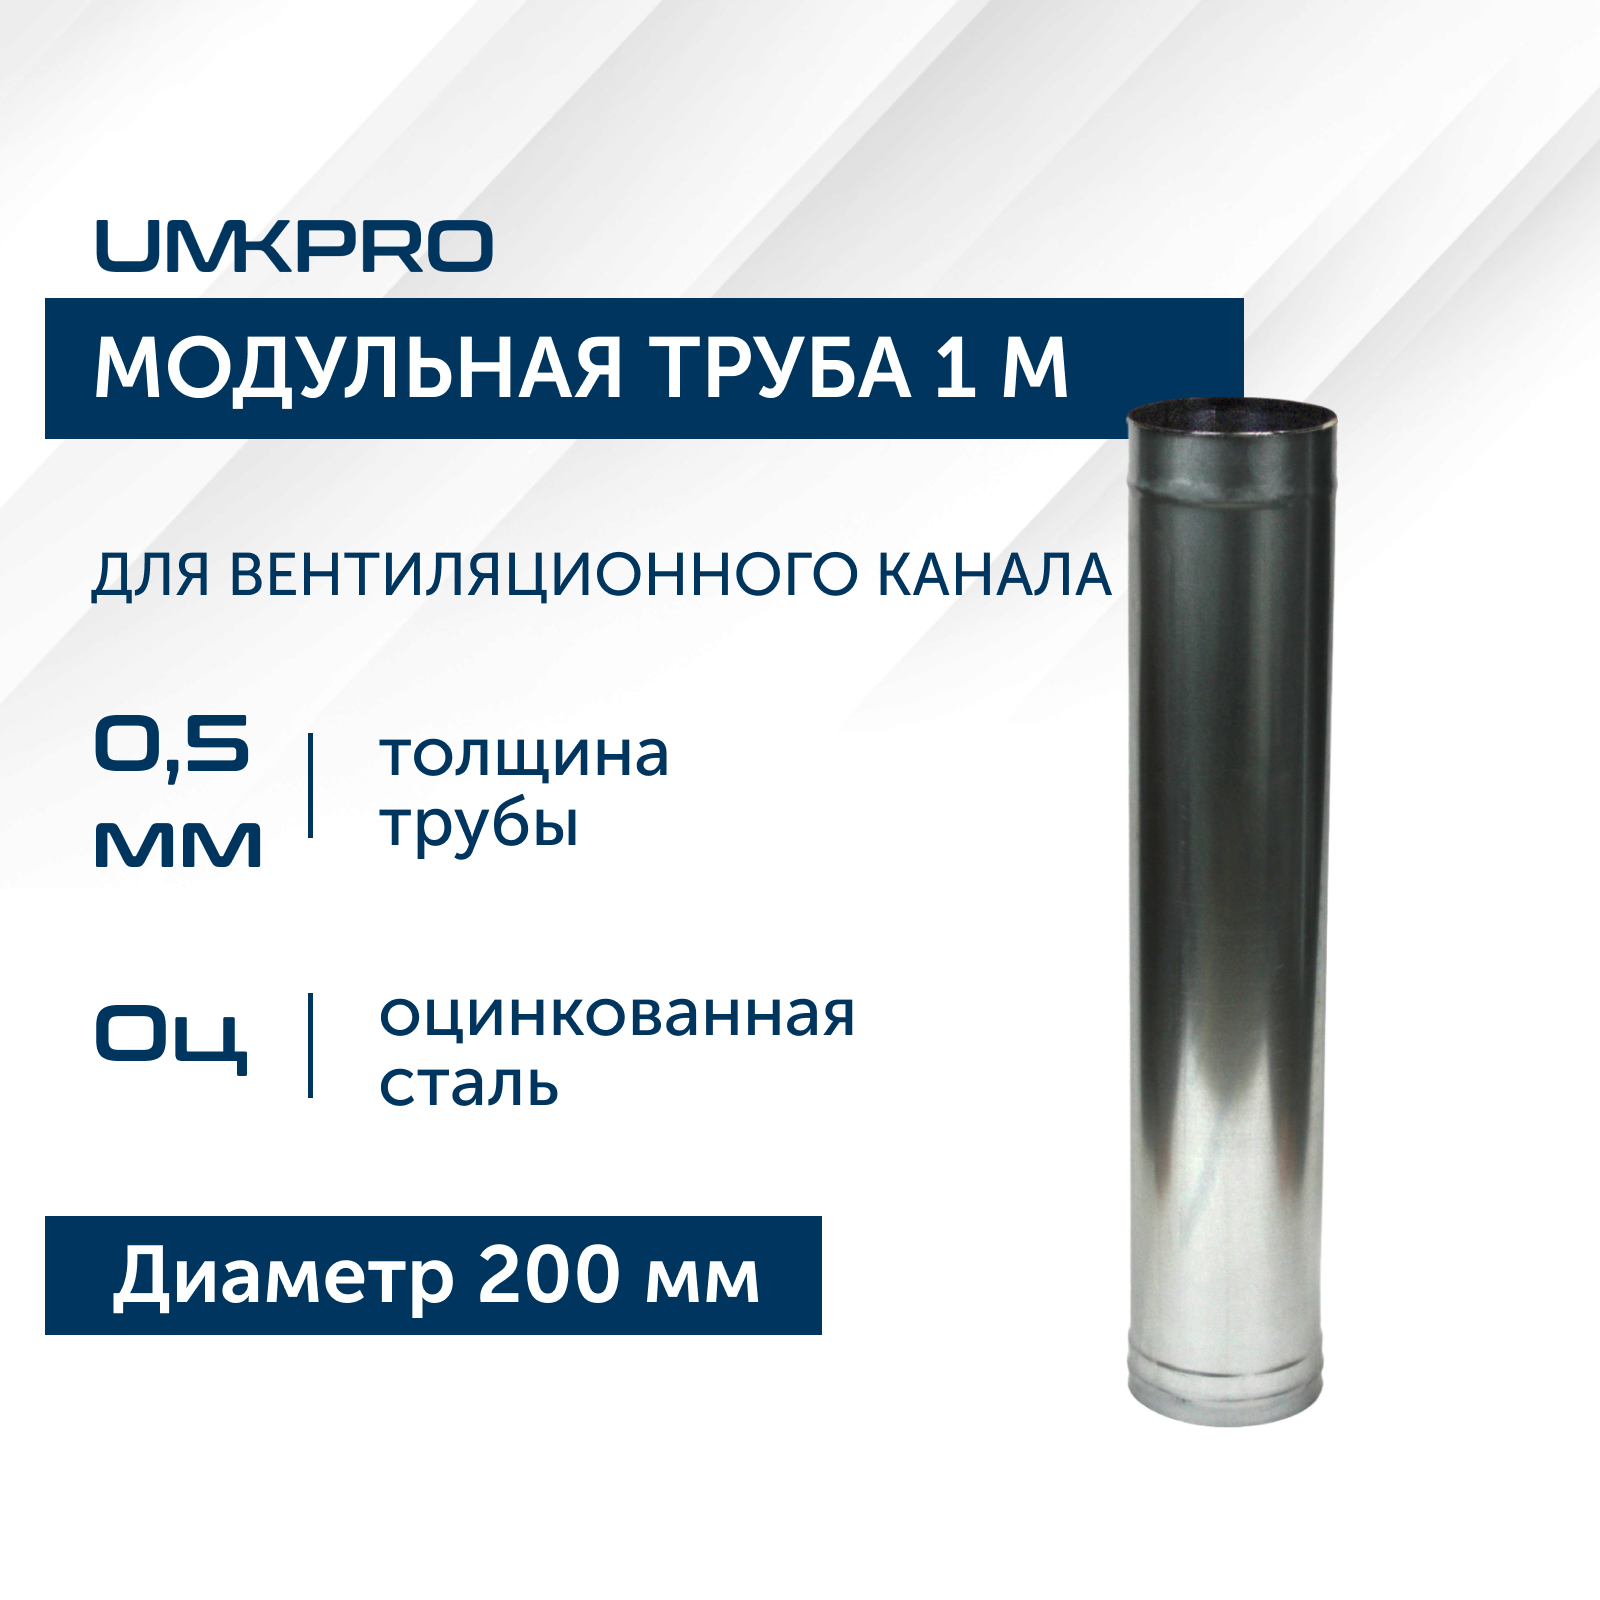 Труба модульная для дымохода 1 м UMKPRO, D 200, Оц/0,5мм